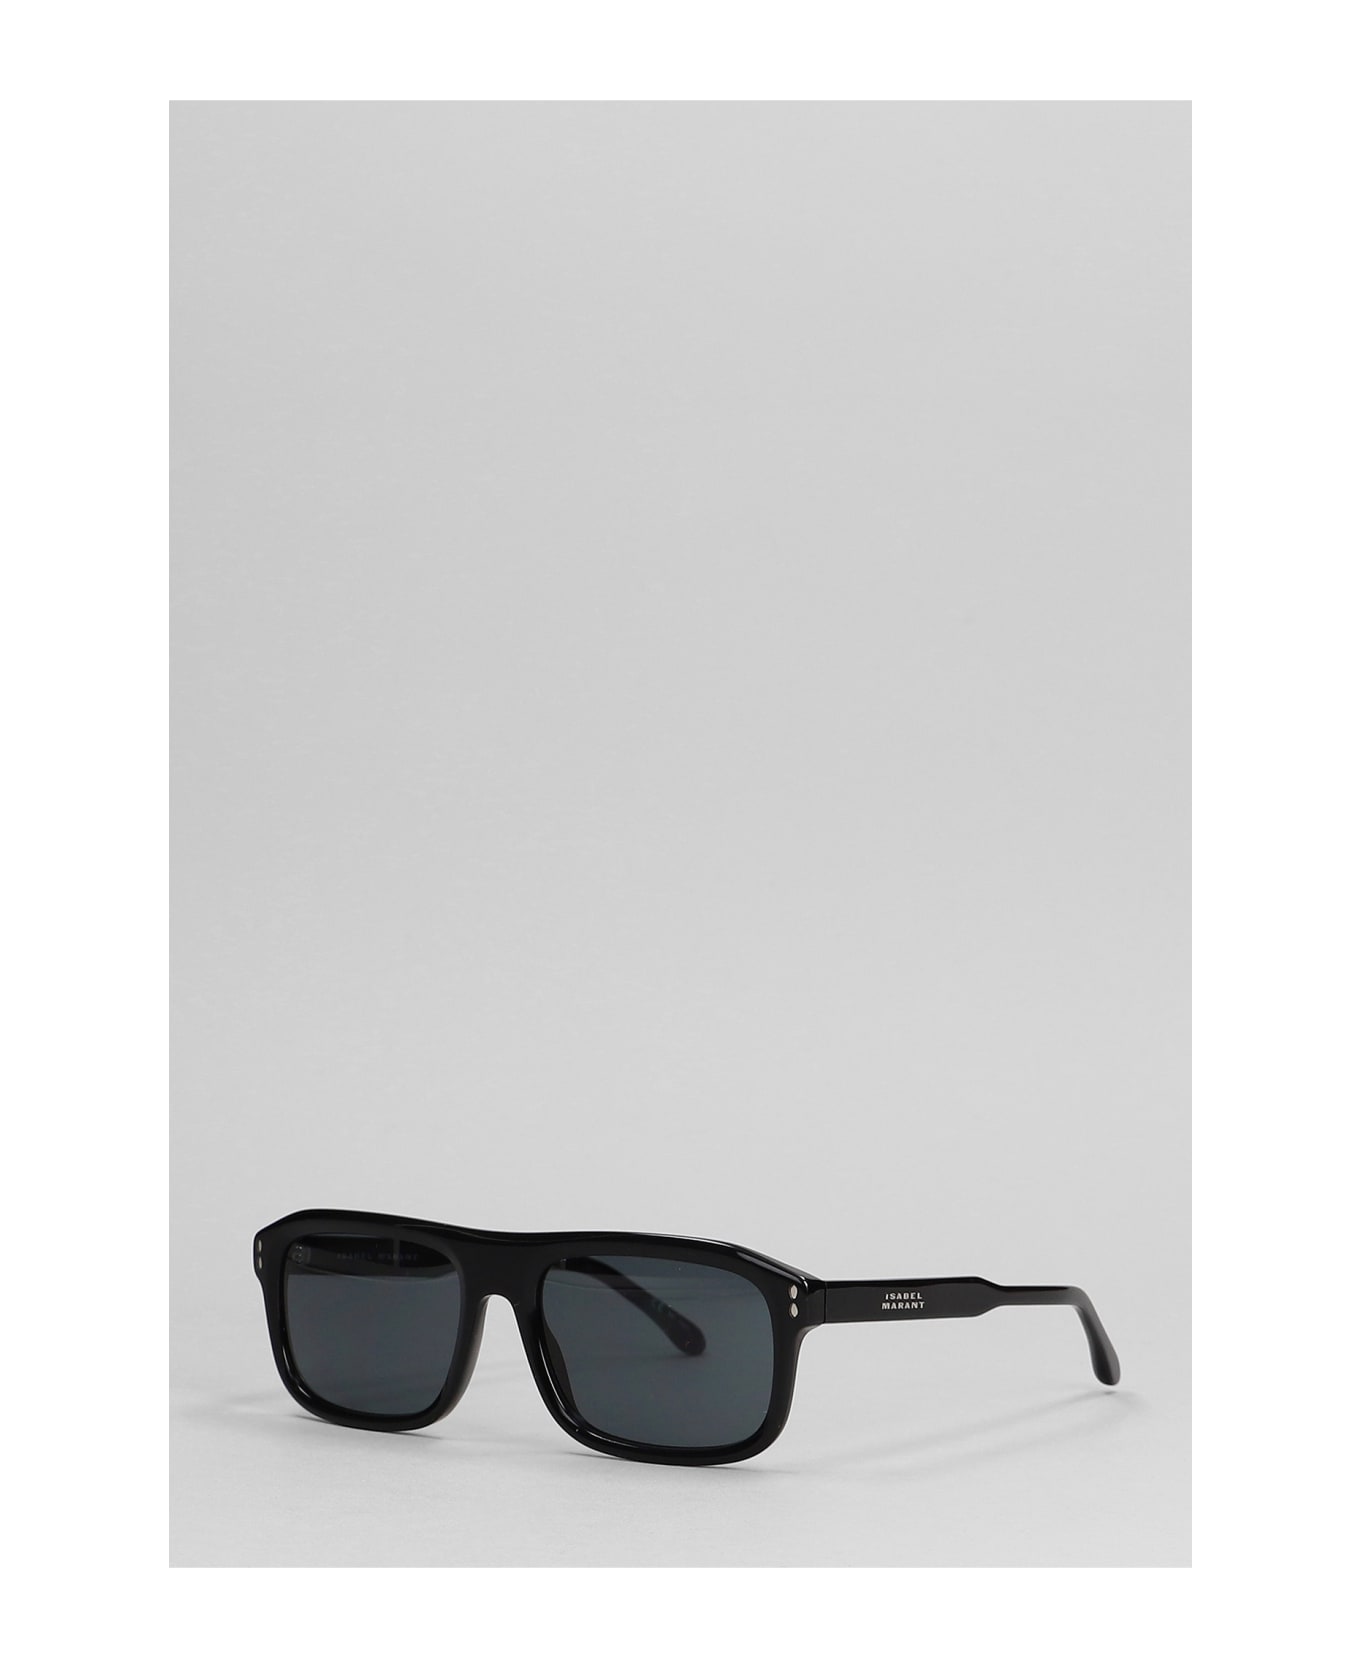 Isabel Marant Sunglasses In Black Acrylic - black